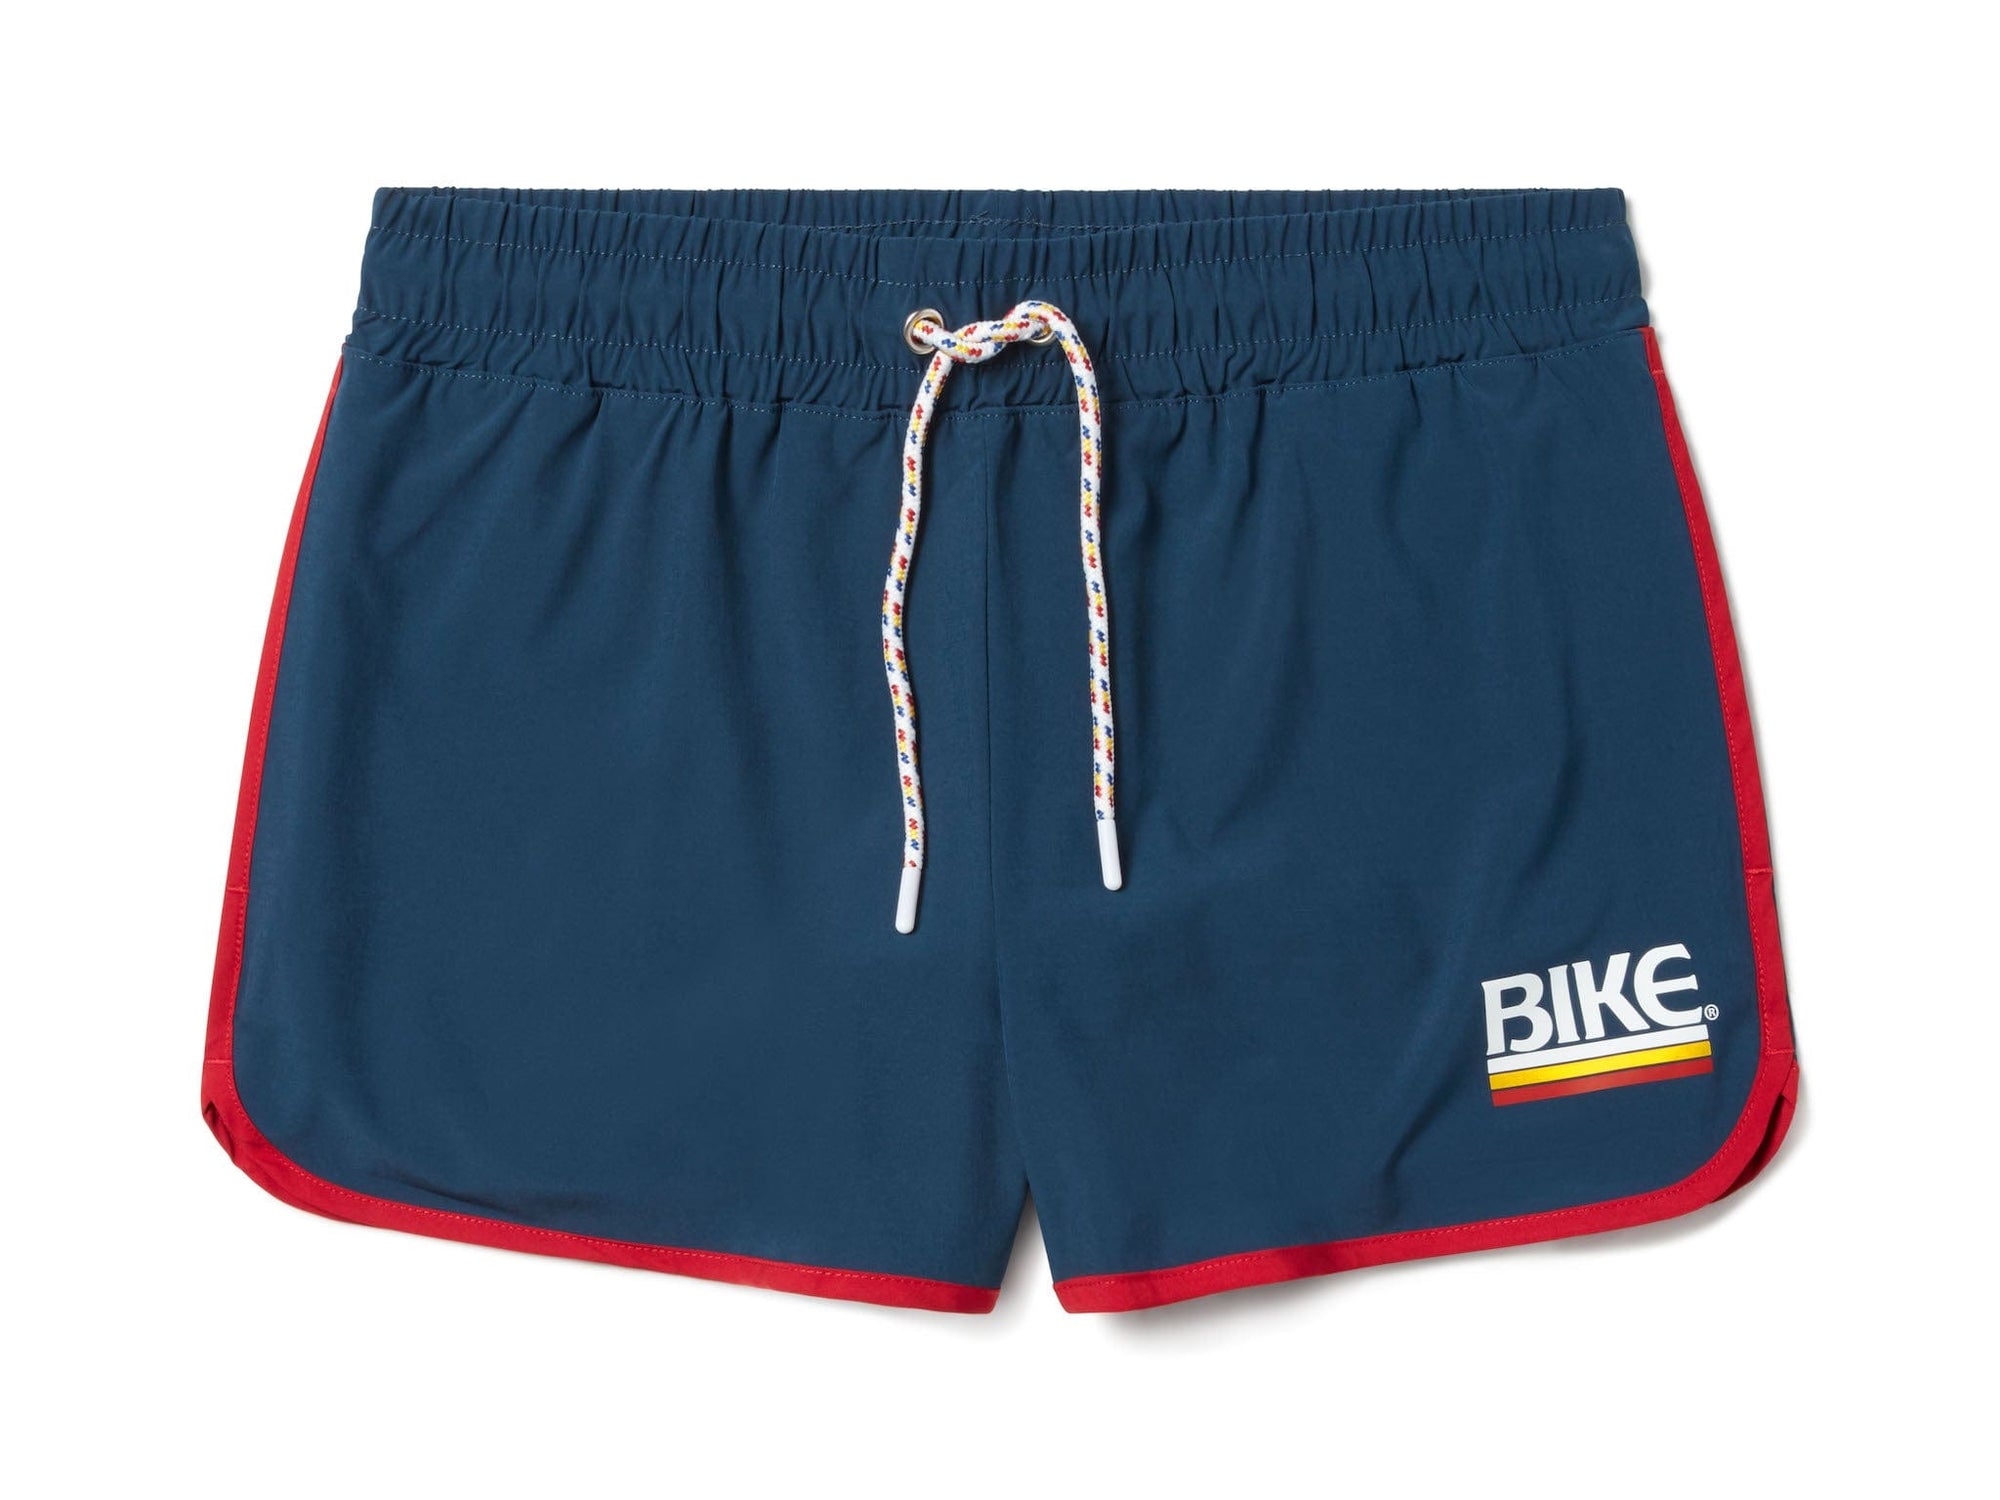 Men's Athletic Shorts - BIKE® Athletic